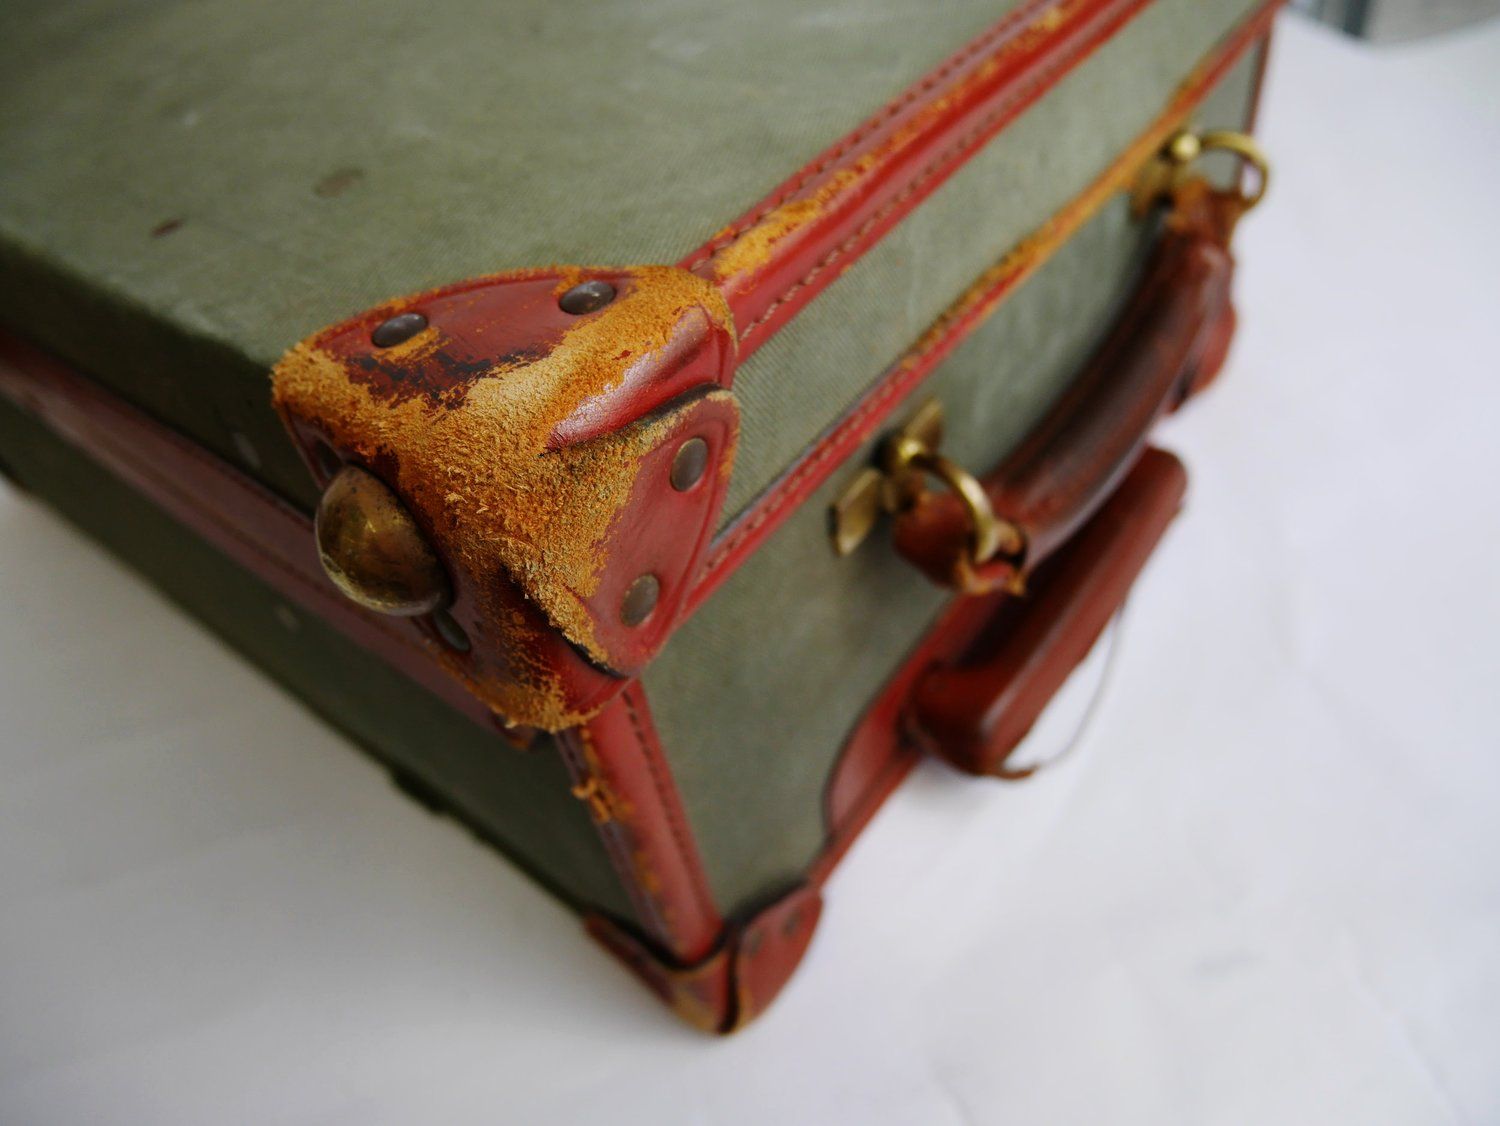 Vintage Suitcase - The Restory